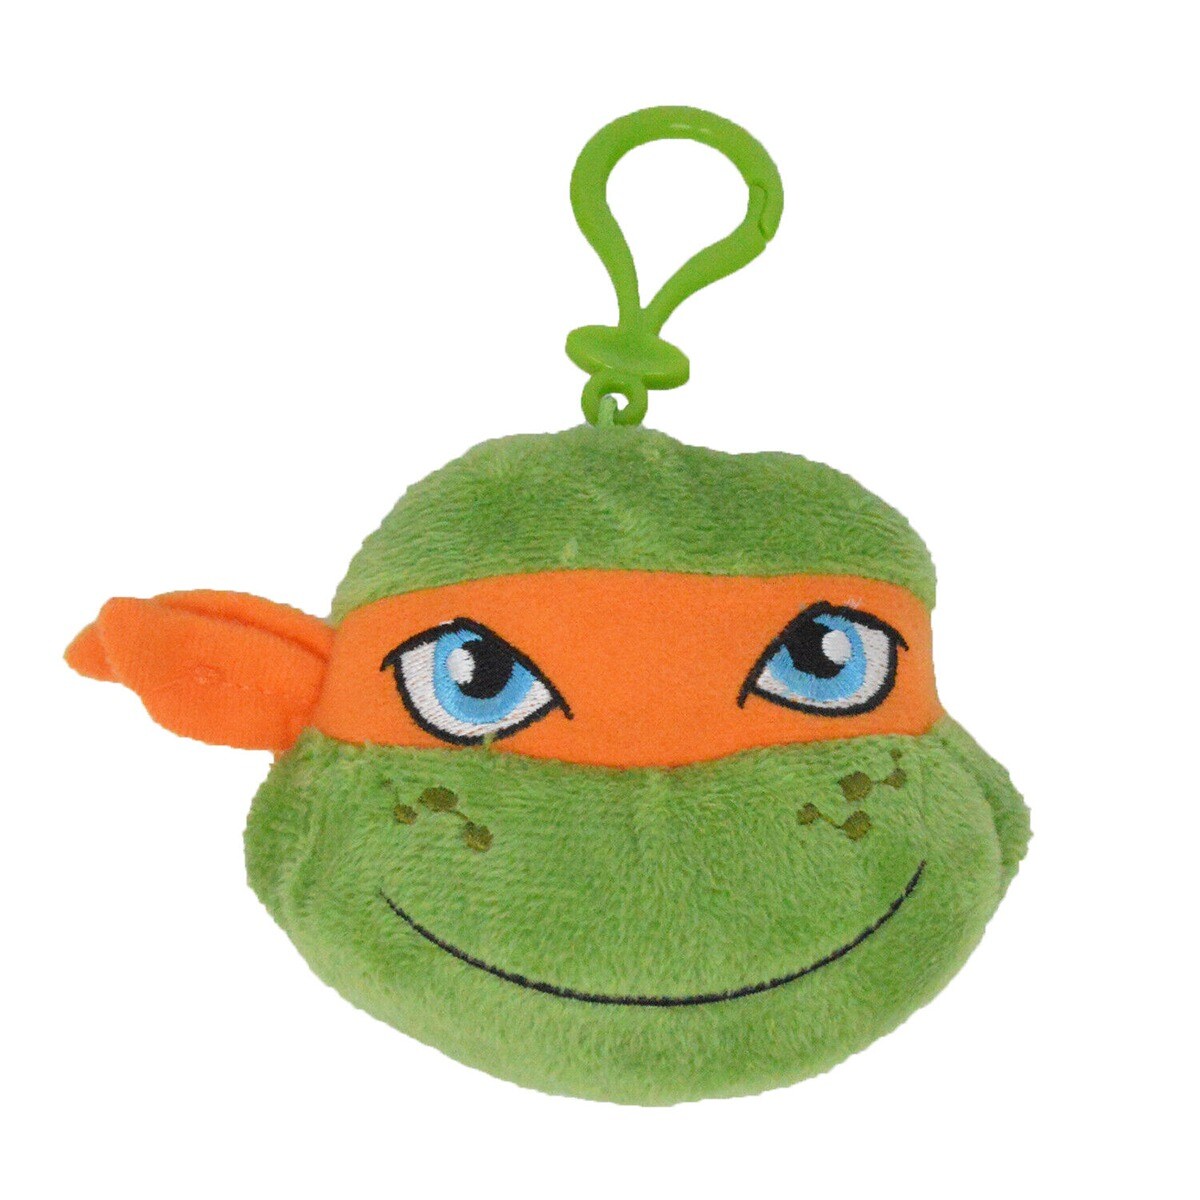 Attachable Teenage Mutant Ninja Turtles Keychain Toy Bag